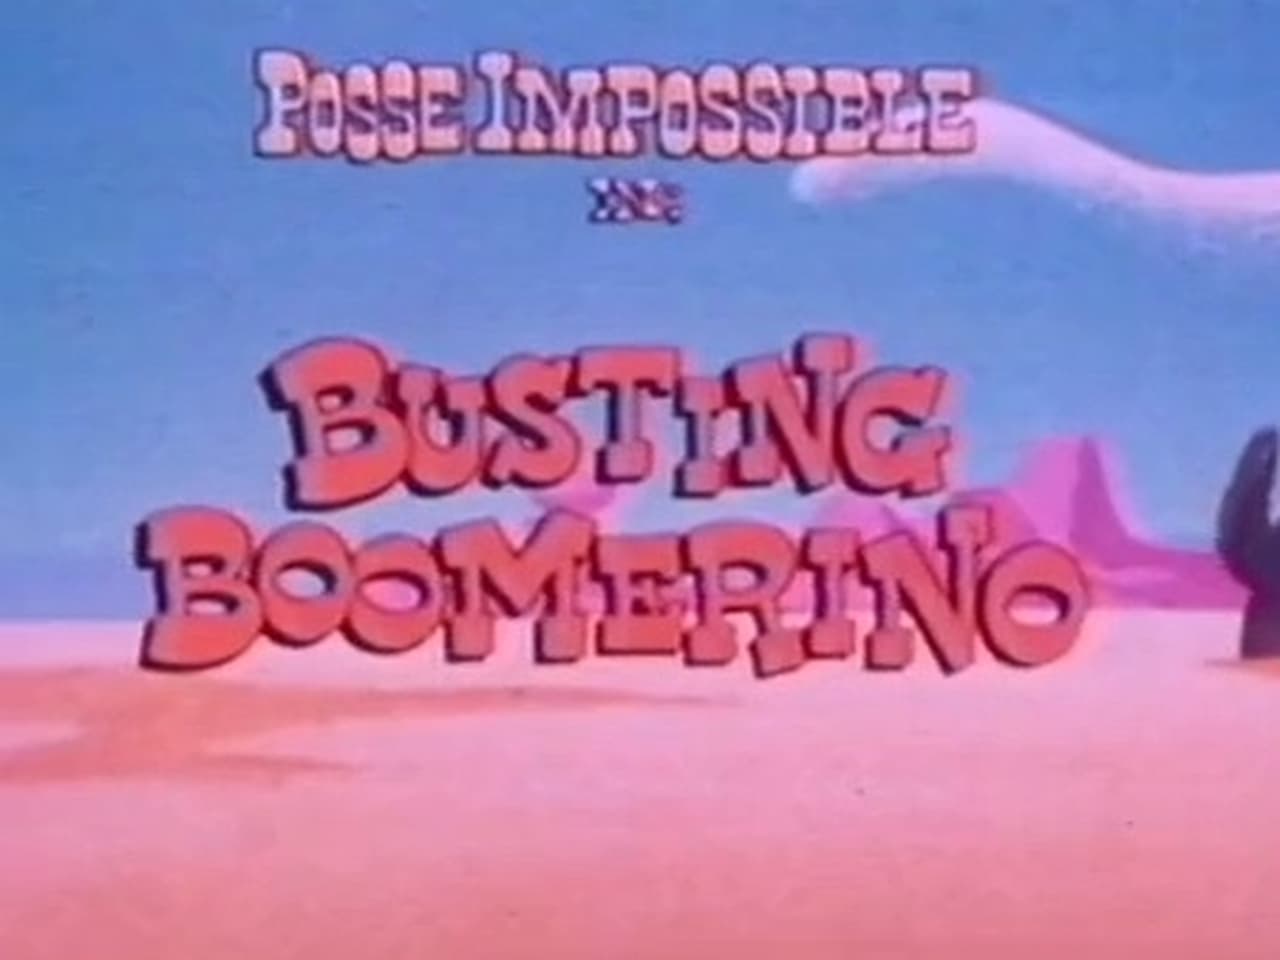 Busting Boomerino